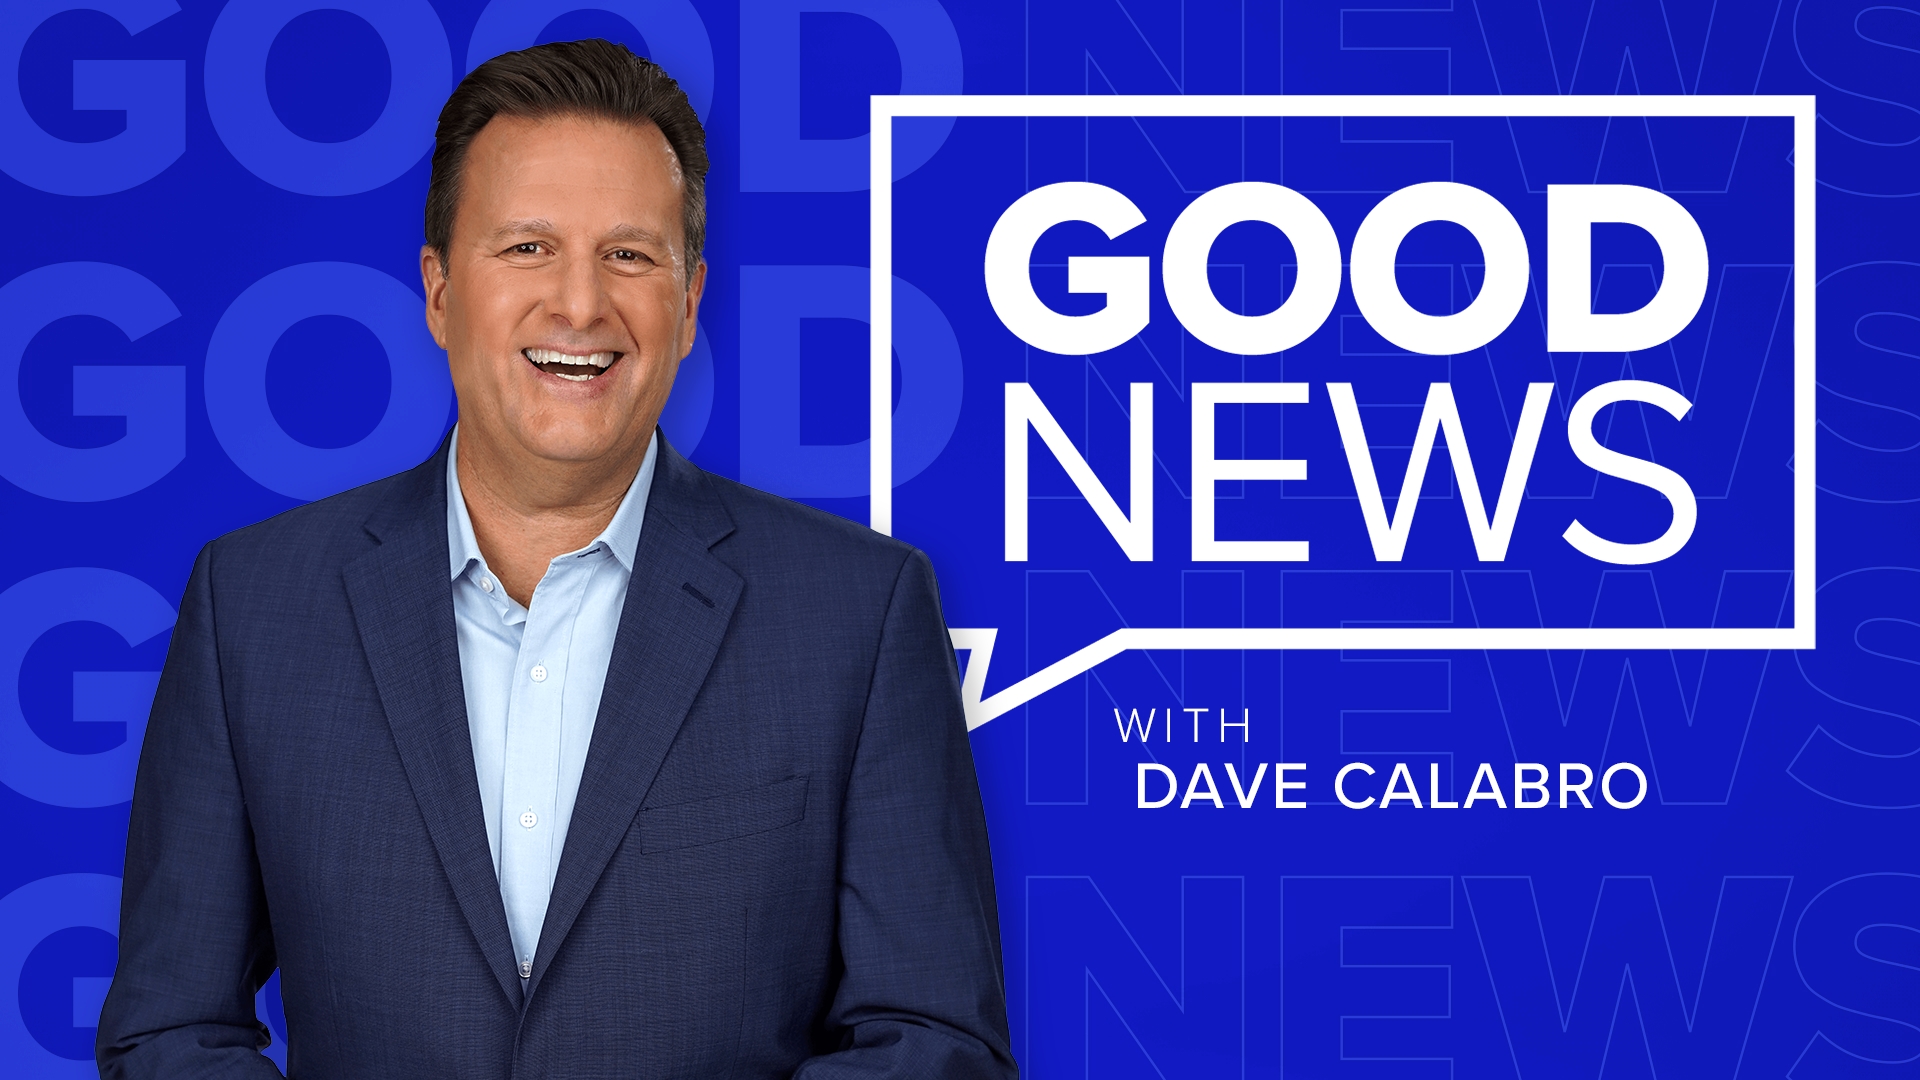 Good News with Dave Calabro